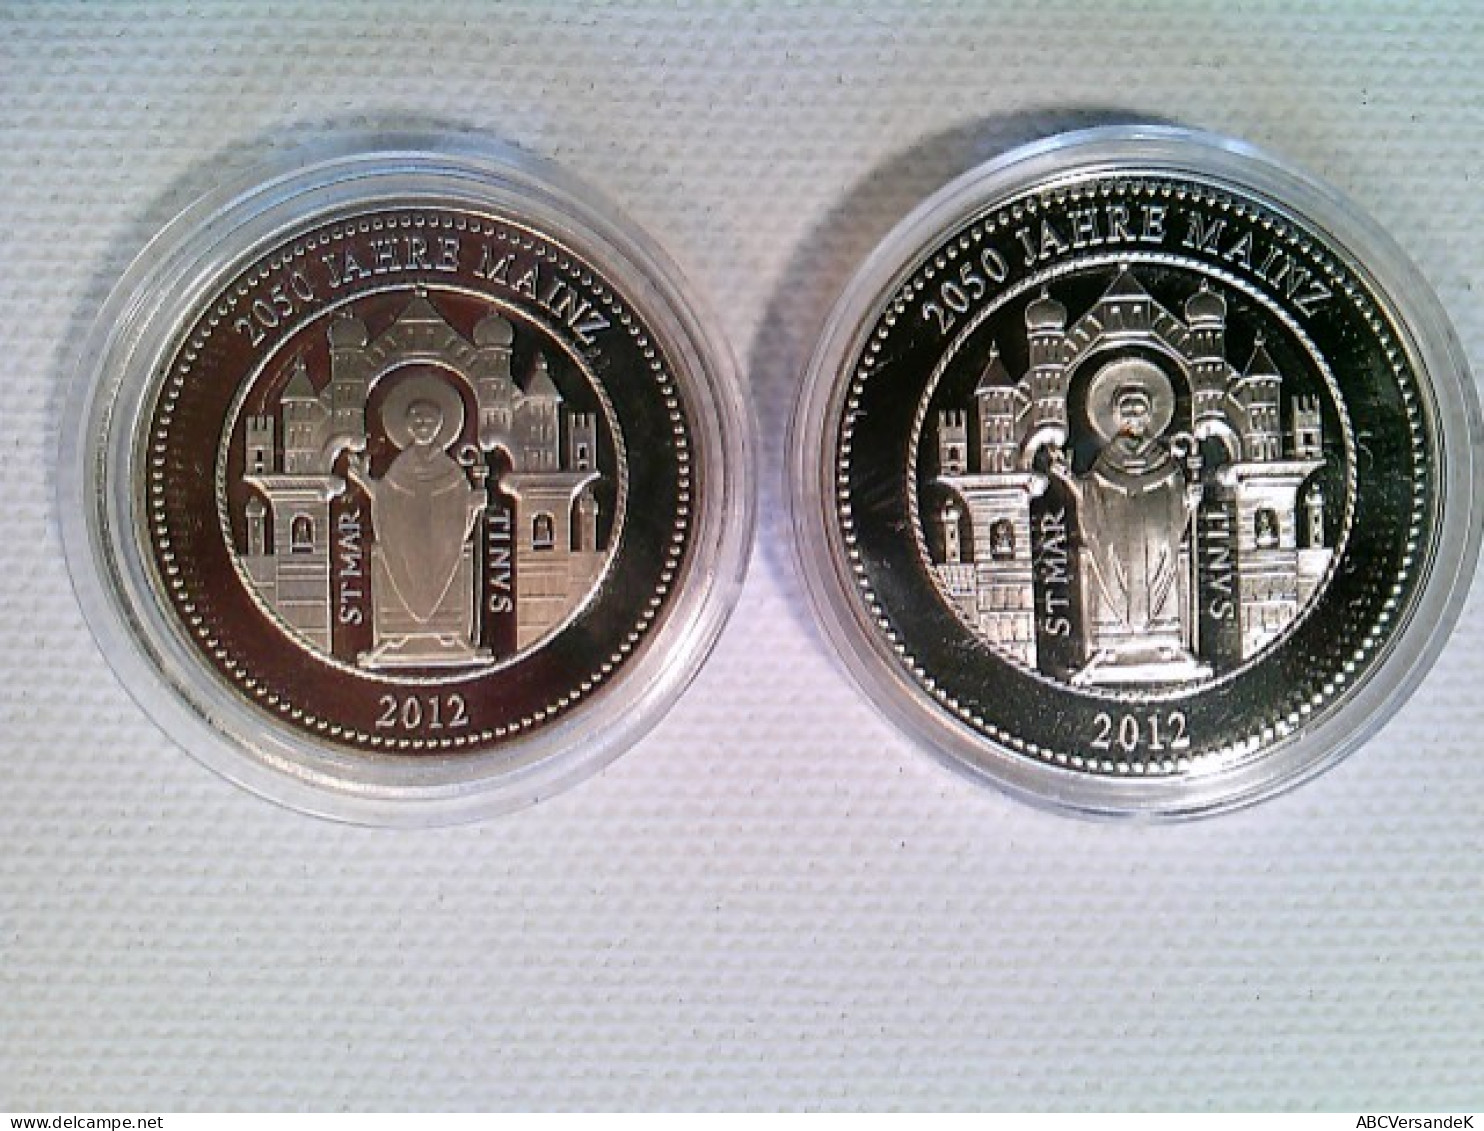 Münze/Medaille, 2x  2050 Jahre Mainz 2012, Mainzer Dom, Domweihe 1009, Konvolut - Numismatics